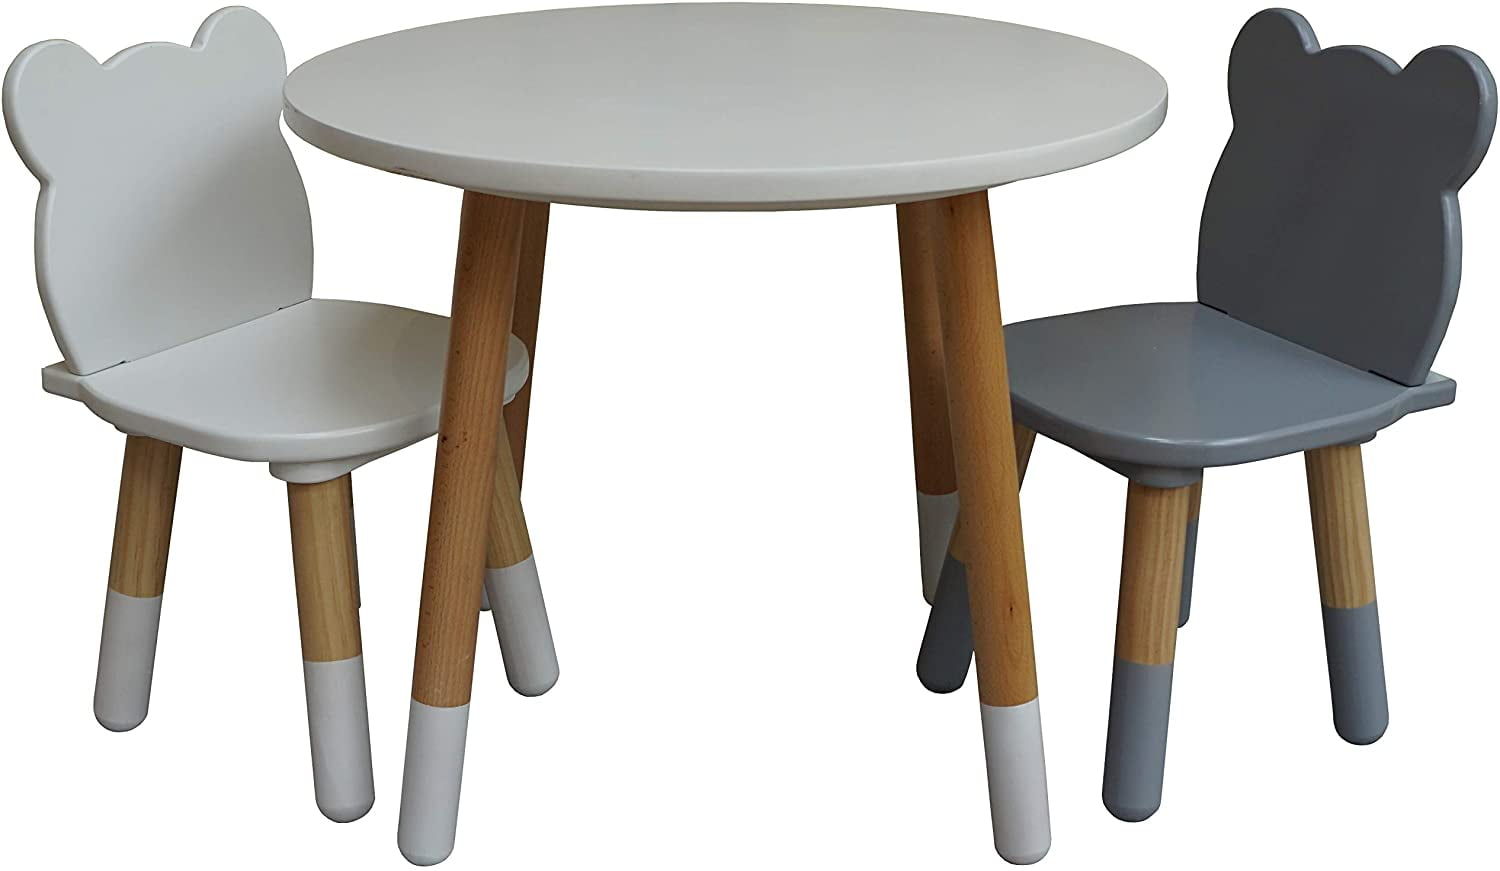 New Wooden Children's Table & Chairs Set Round Furniture Kids White 